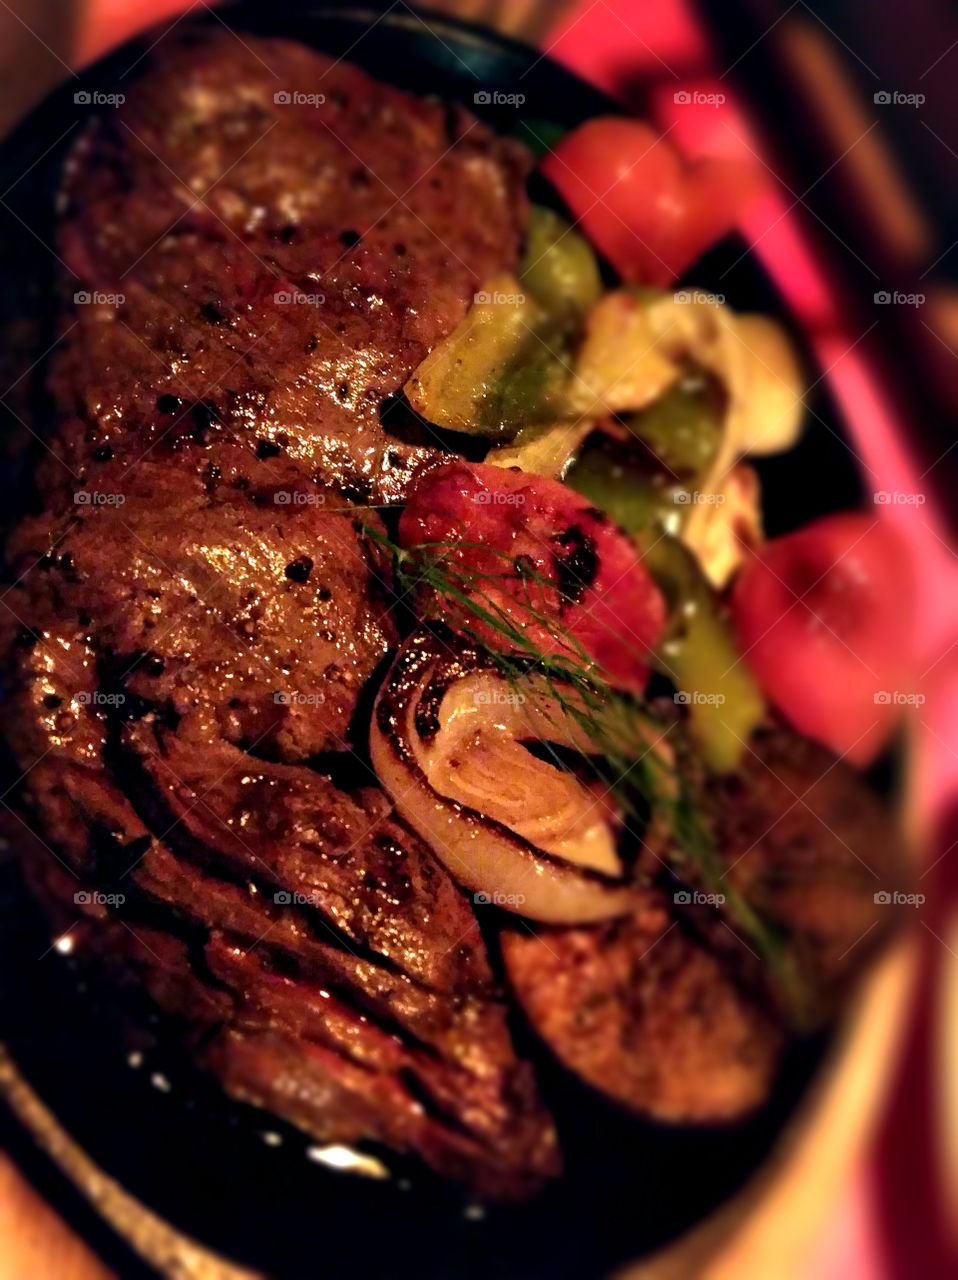 steak and grilled veggies